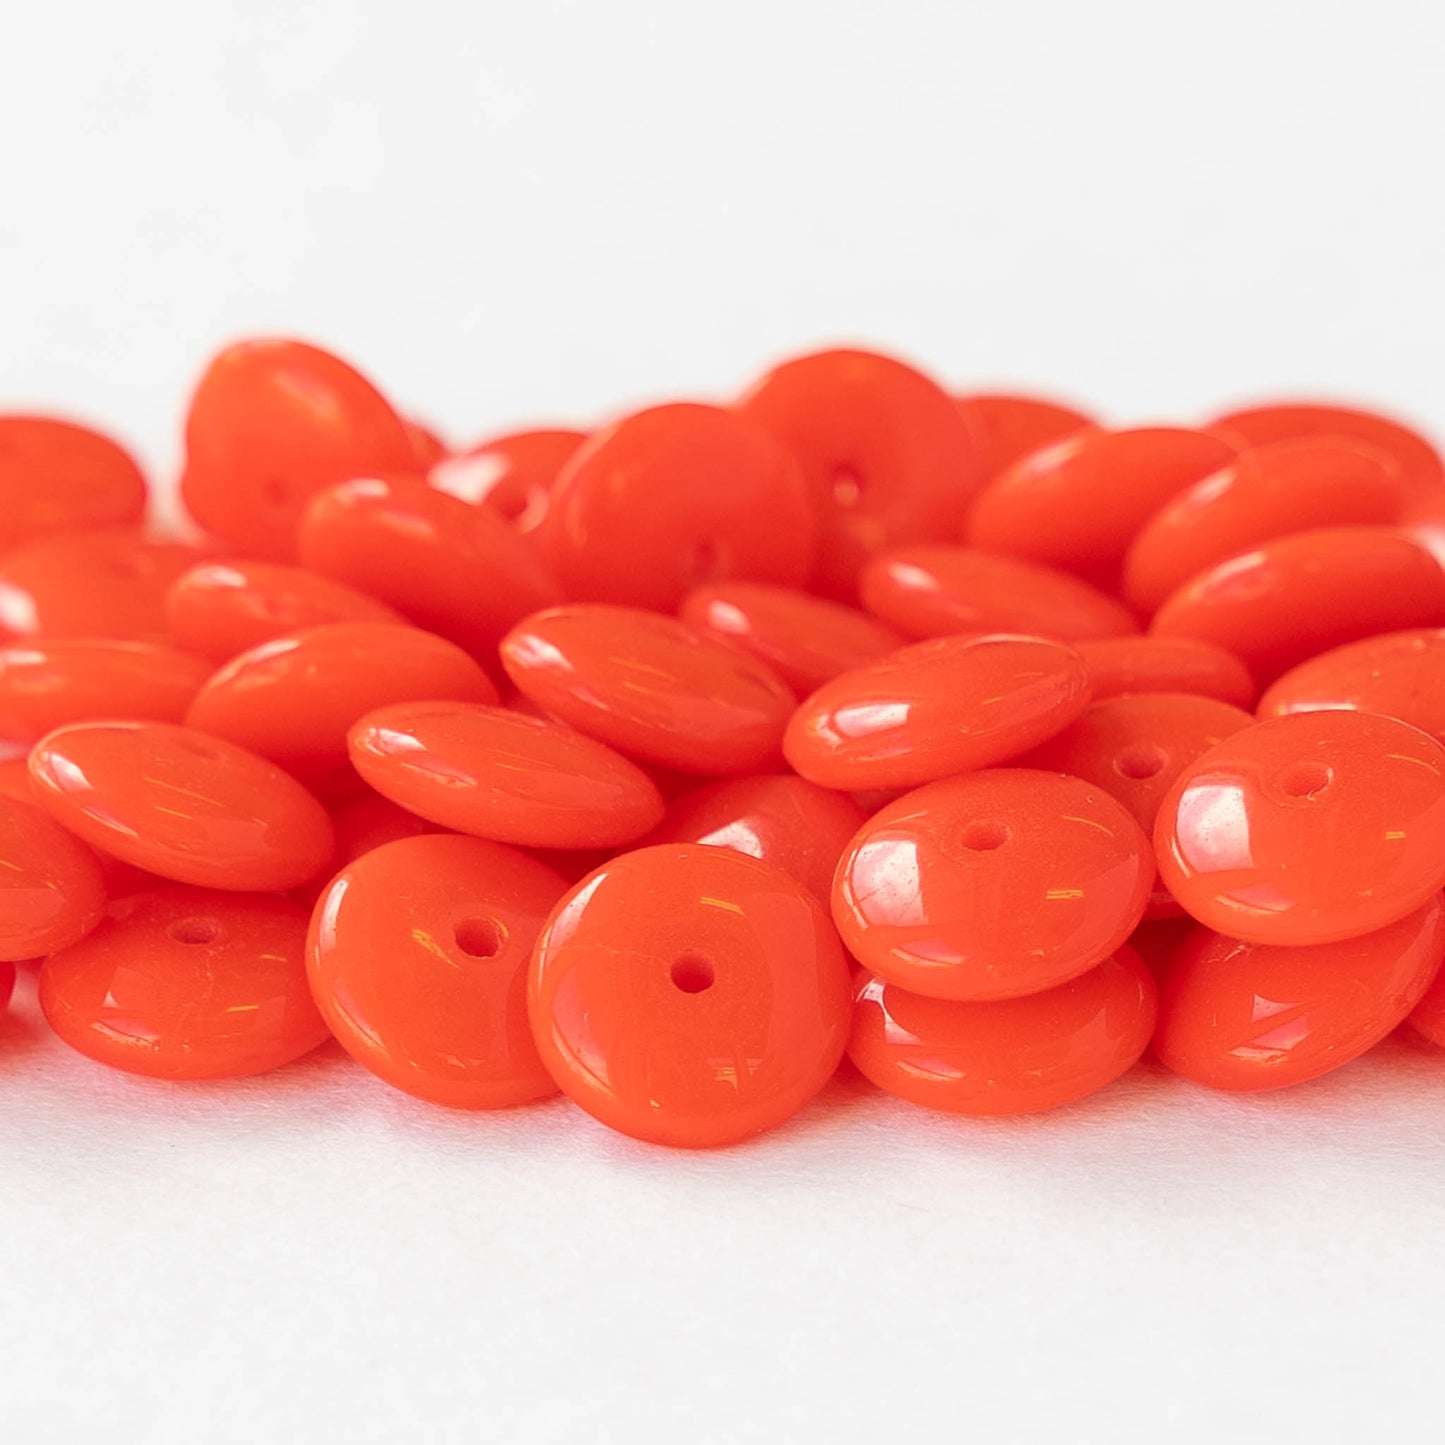 8mm Glass Rondelle Beads - Opaque Orange - 50 Beads